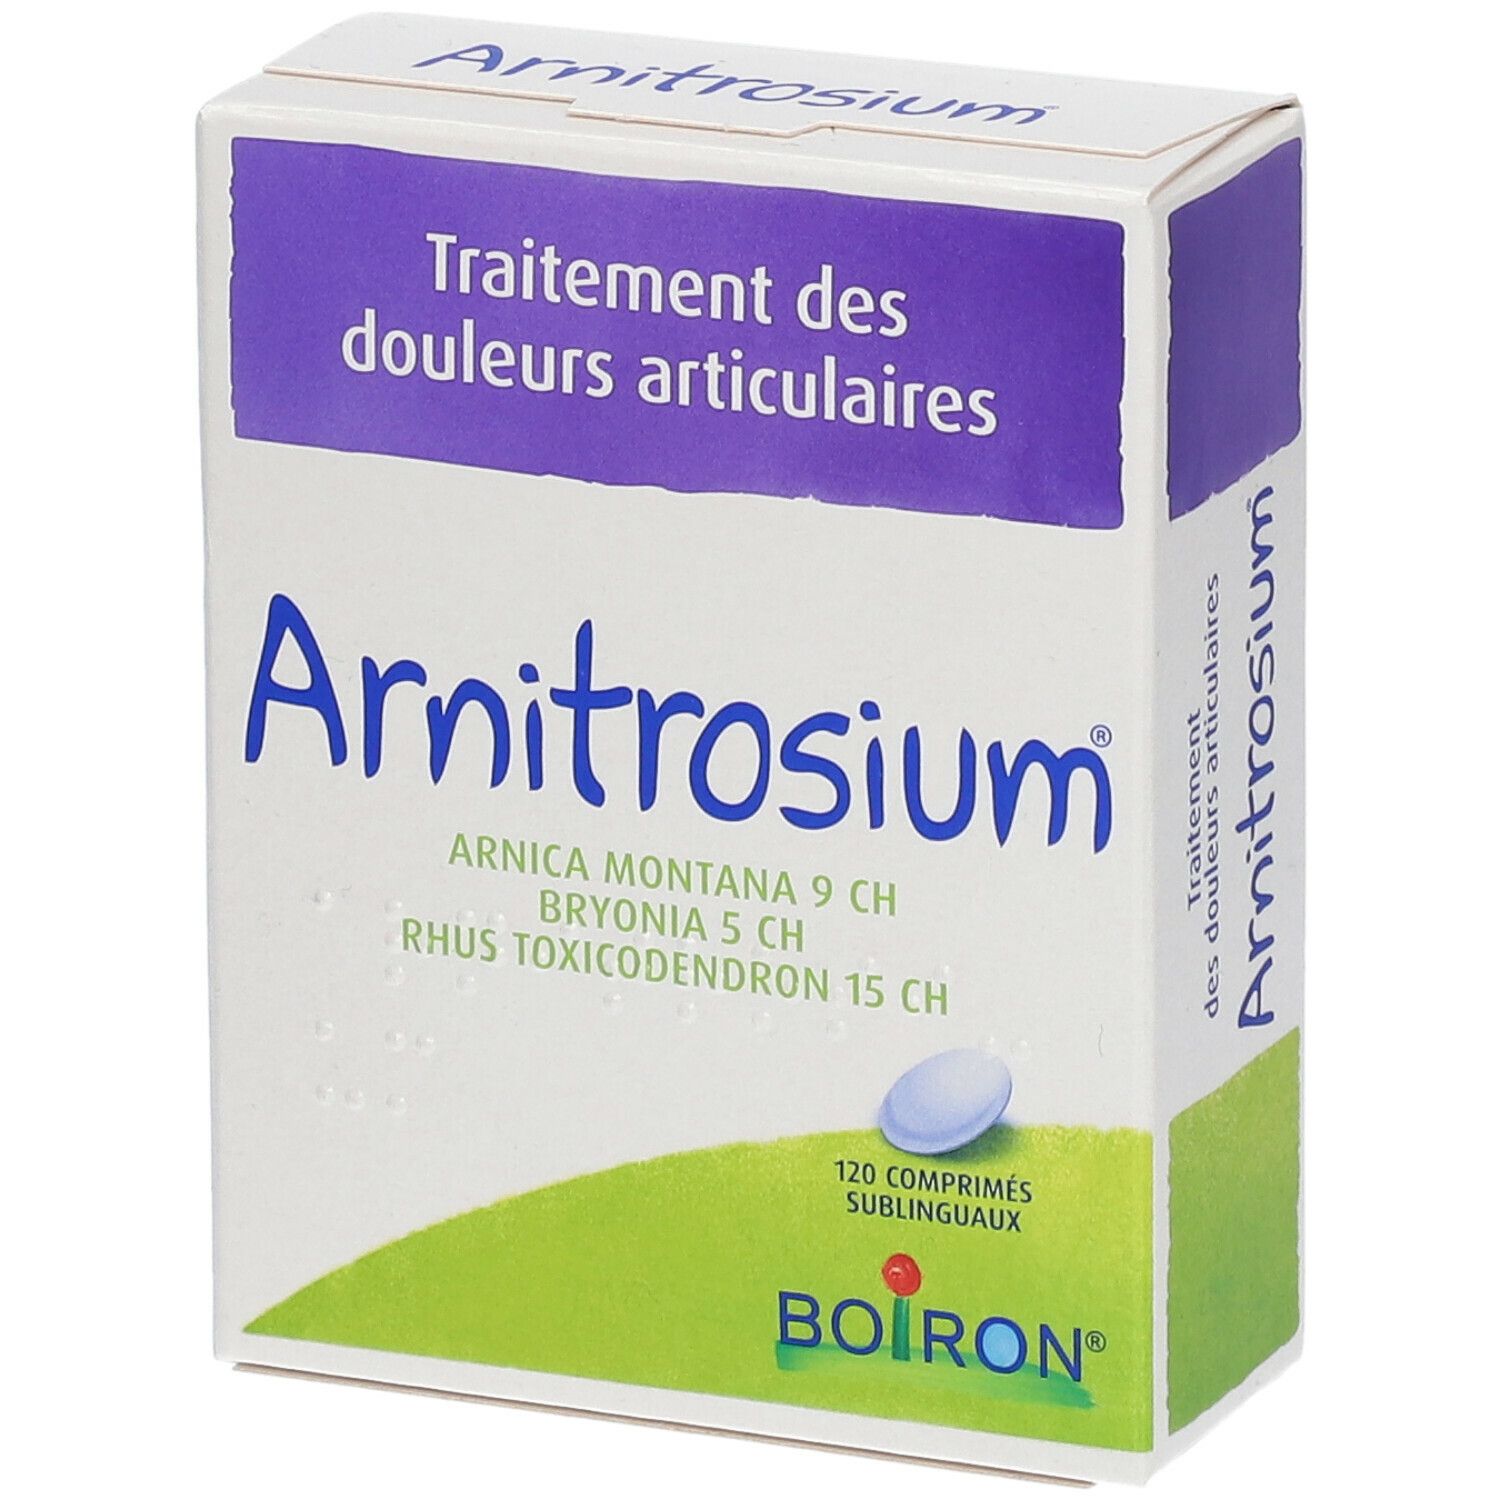 Boiron® Arnitrosium®